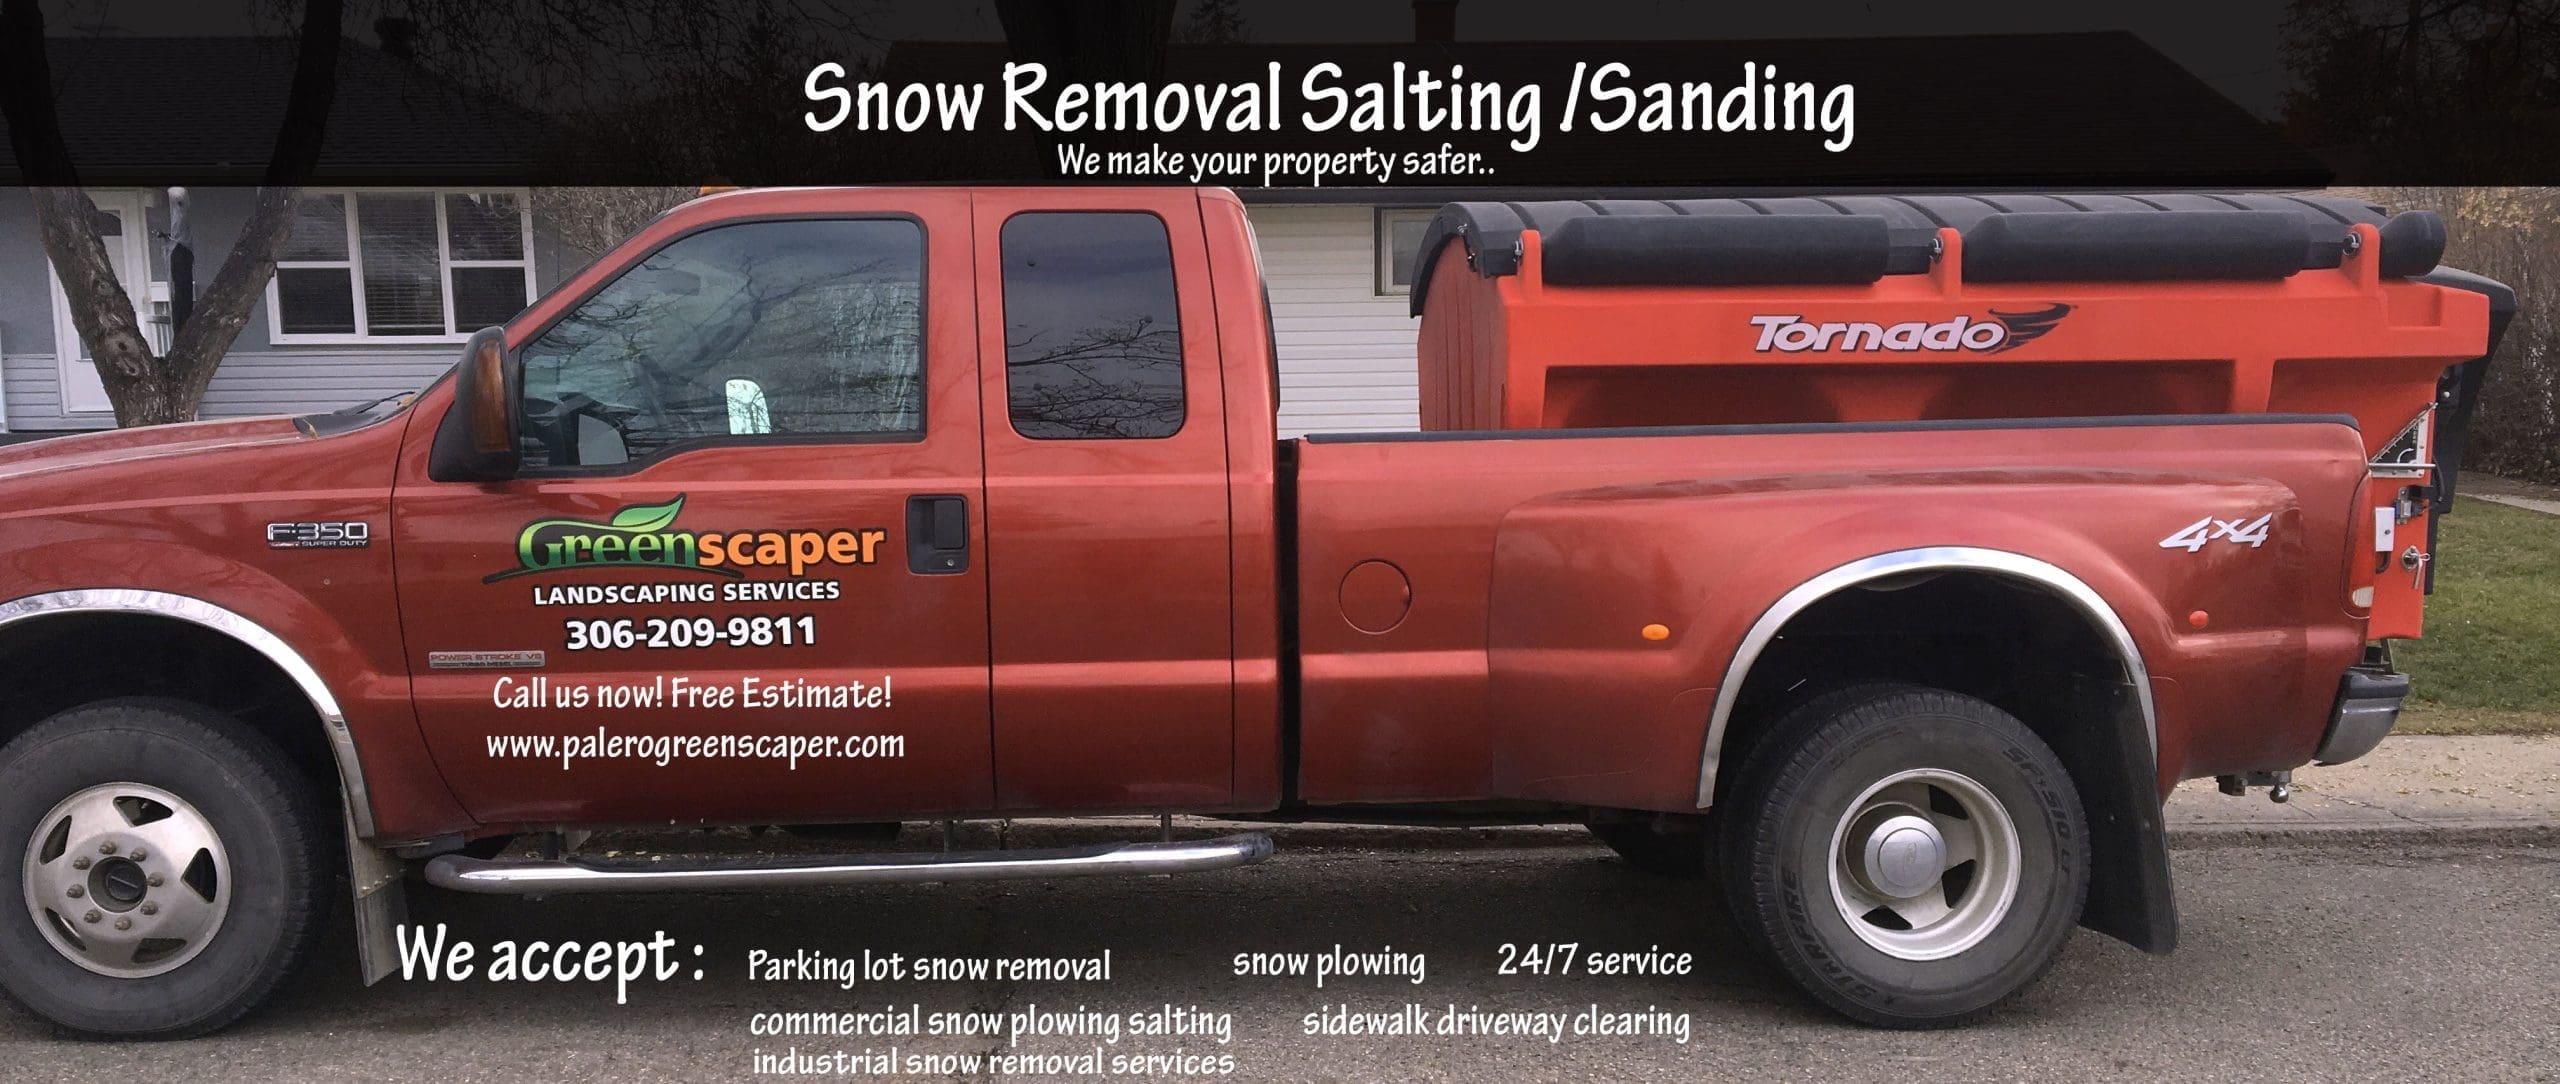 snow removal service sanding salting regina